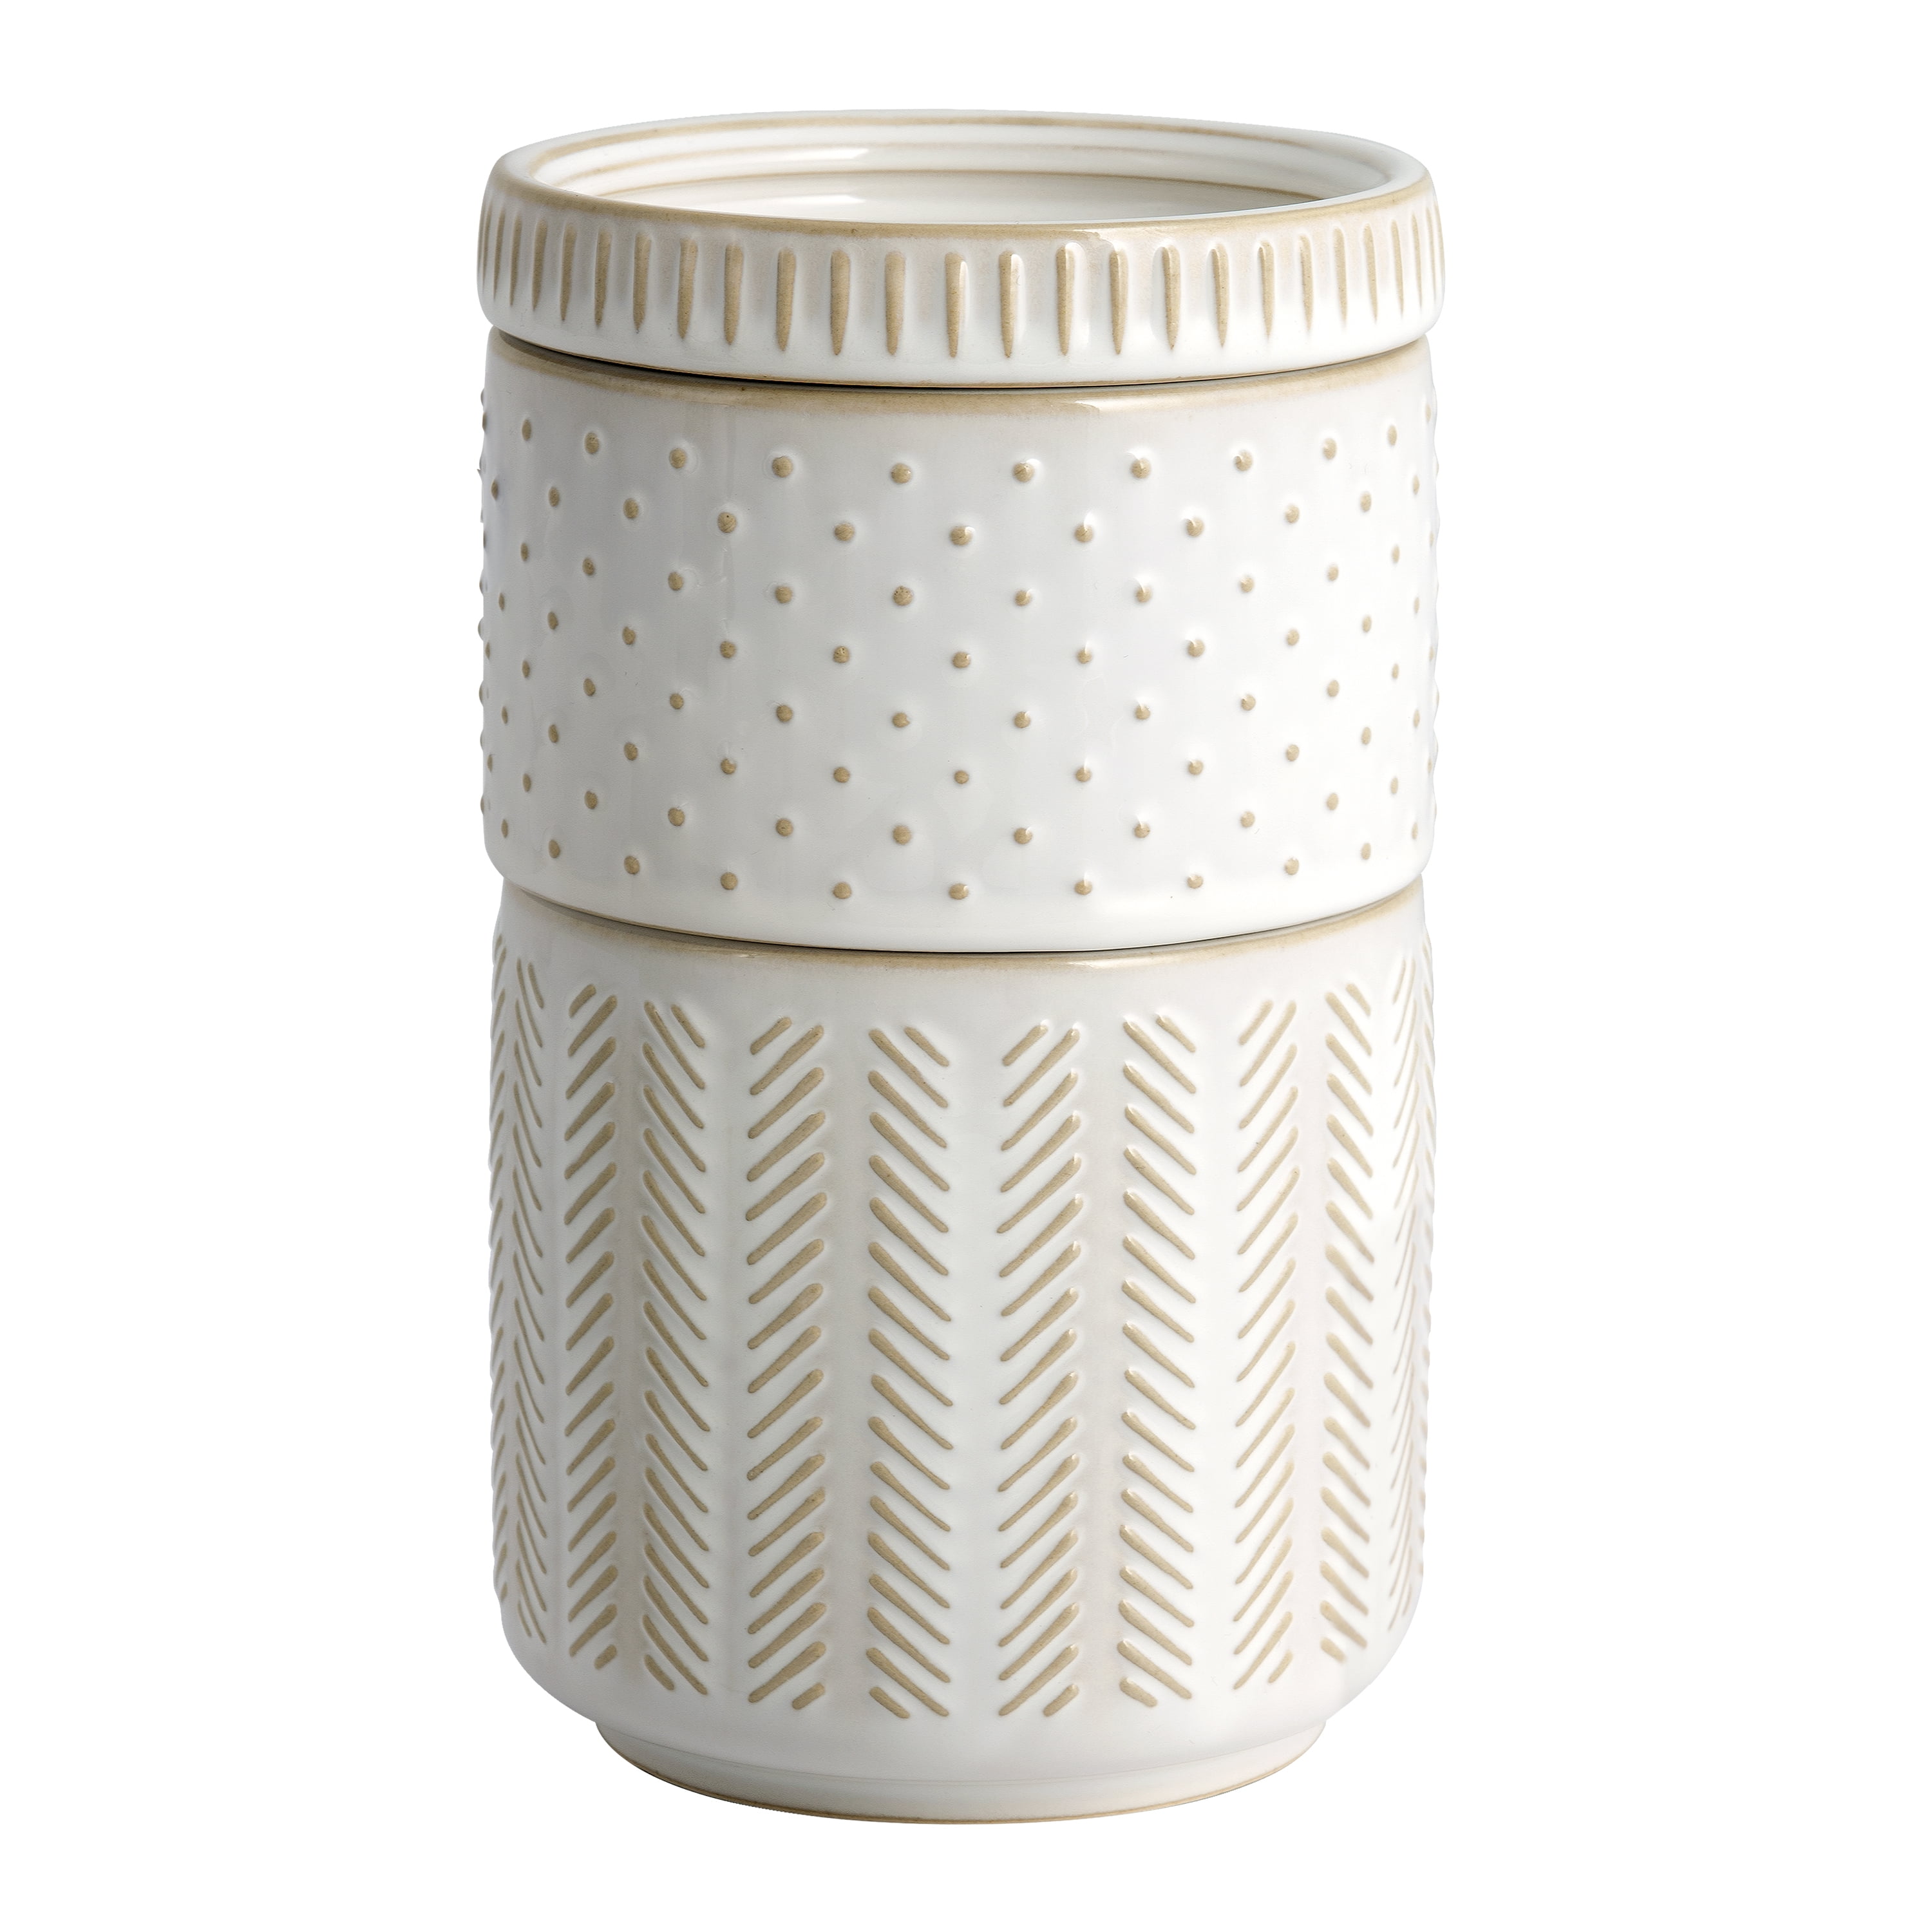 3-Piece Textured Ceramic Stackable Jar Set in Creamy White, Better Homes & Gardens